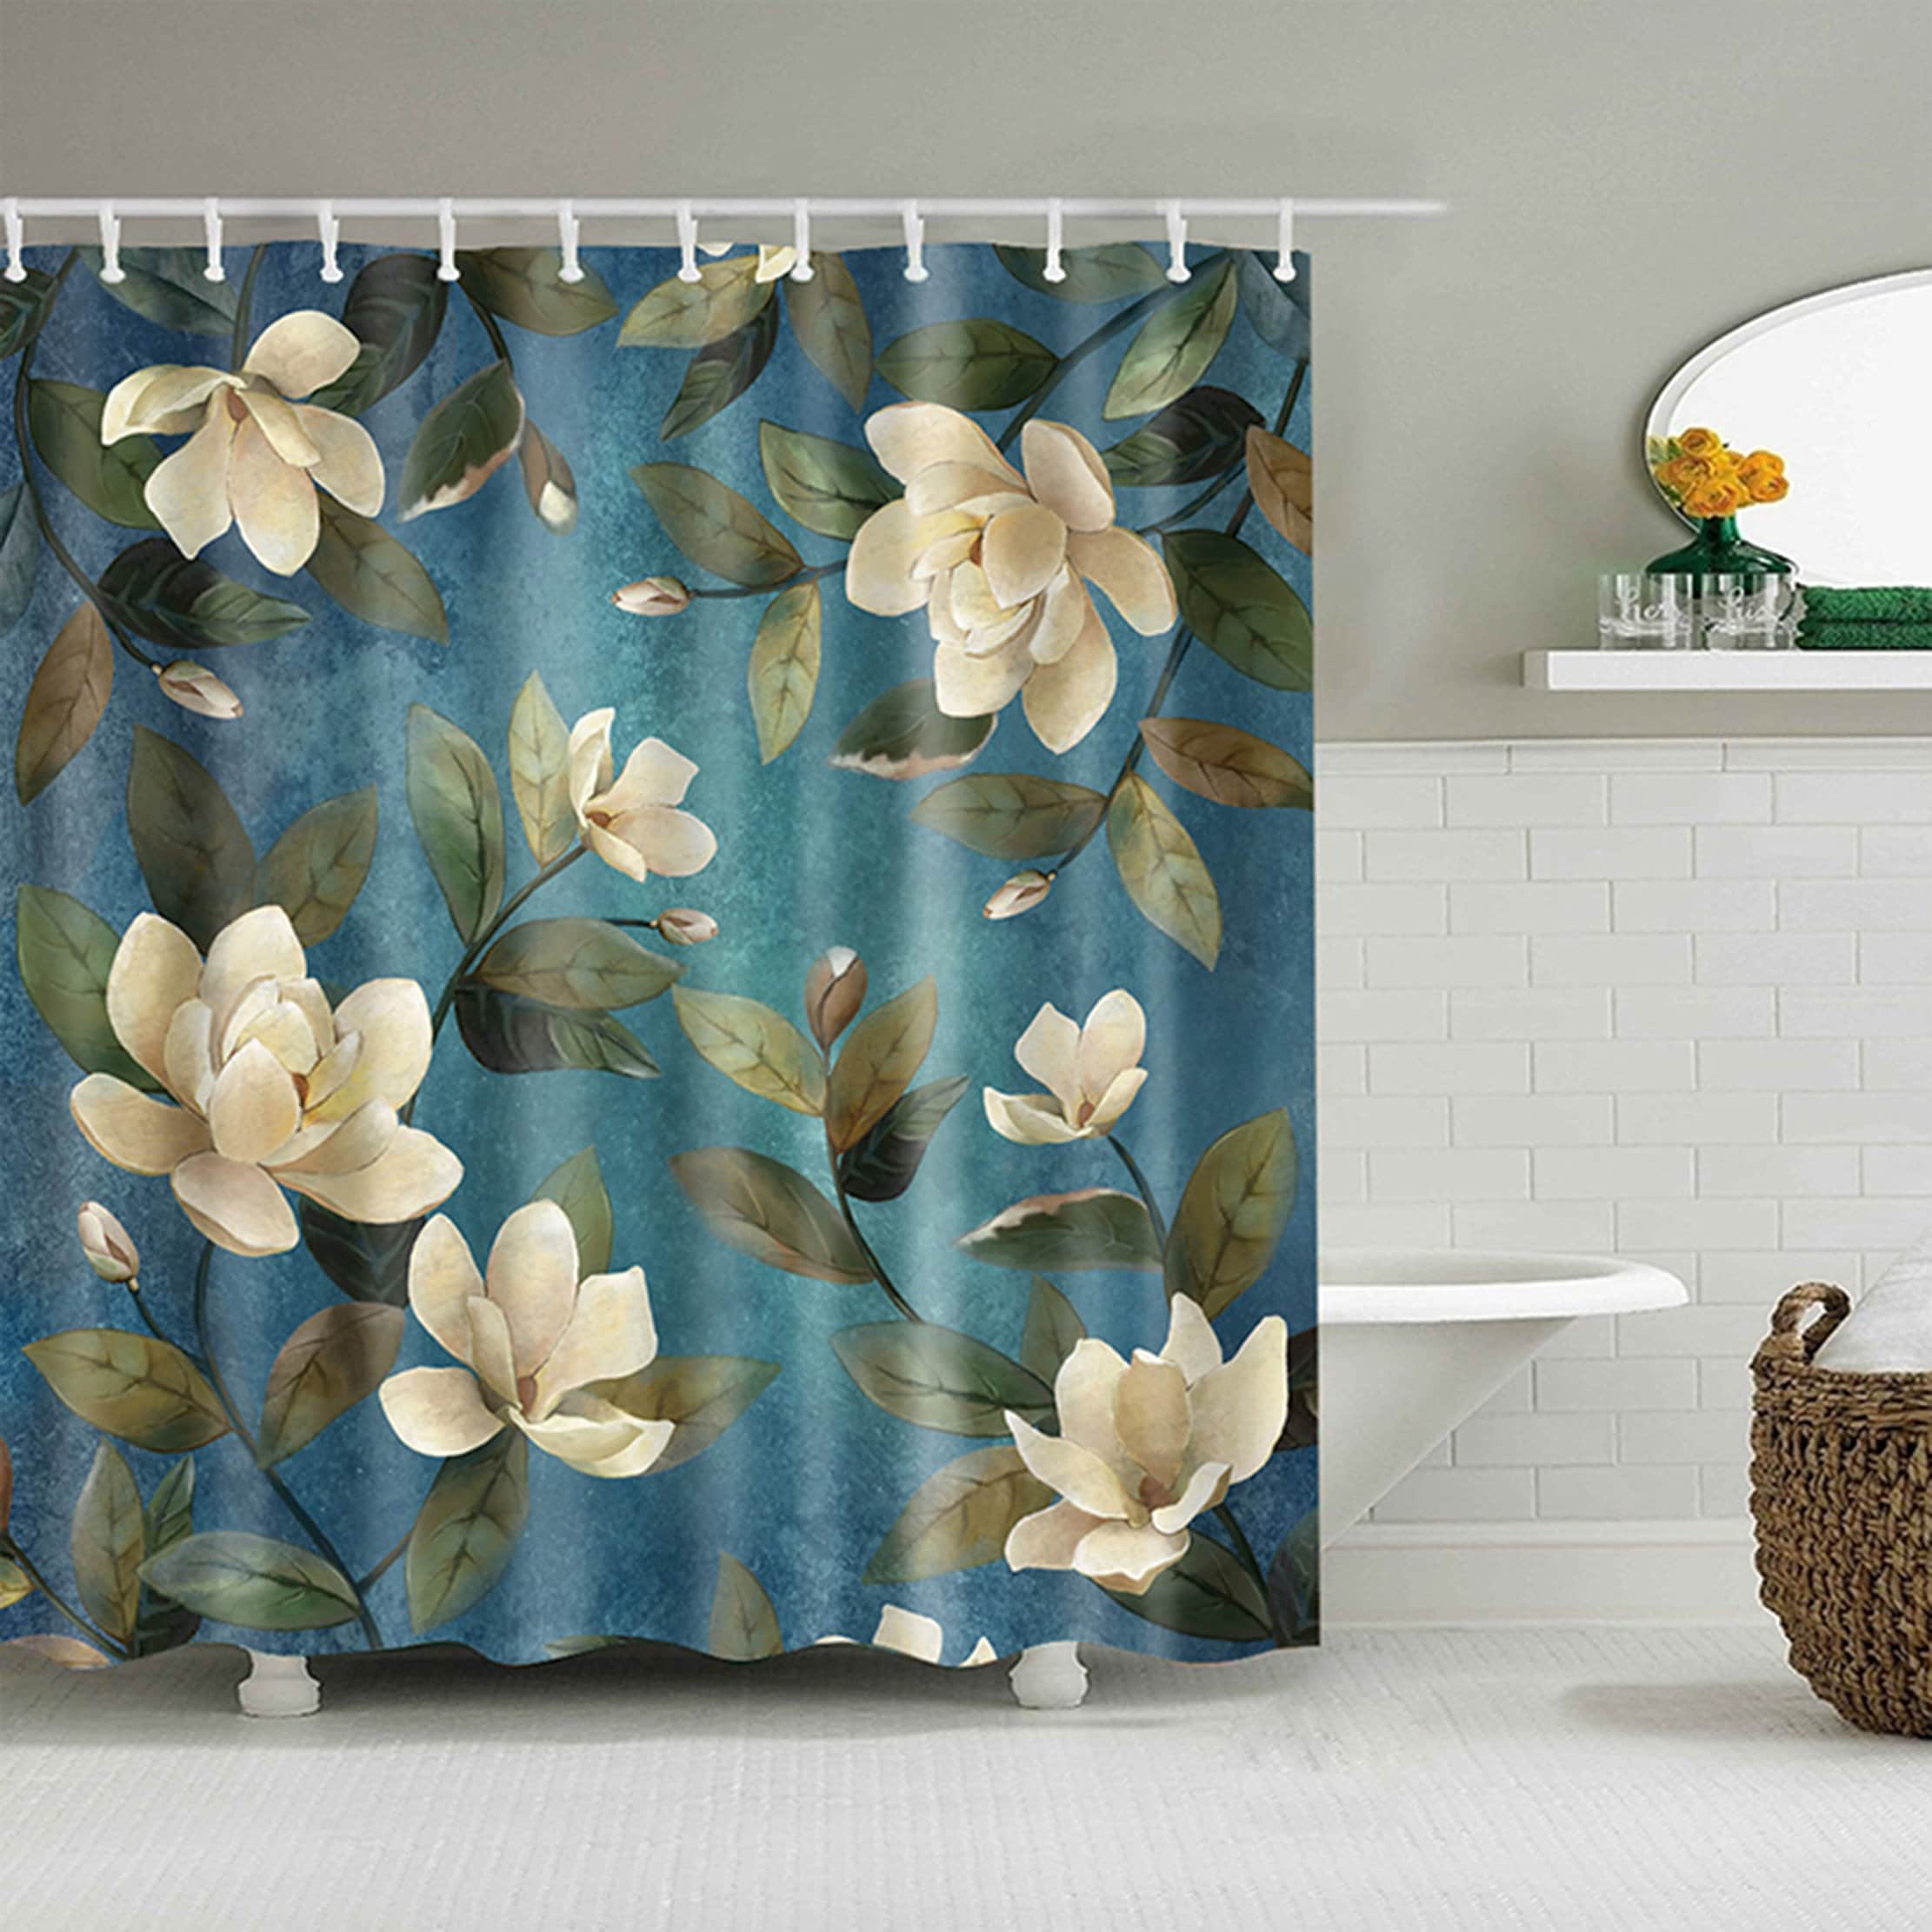 Floral Shower Curtains Retro Blue Flowers Waterproof Fabric Bath Curtain 